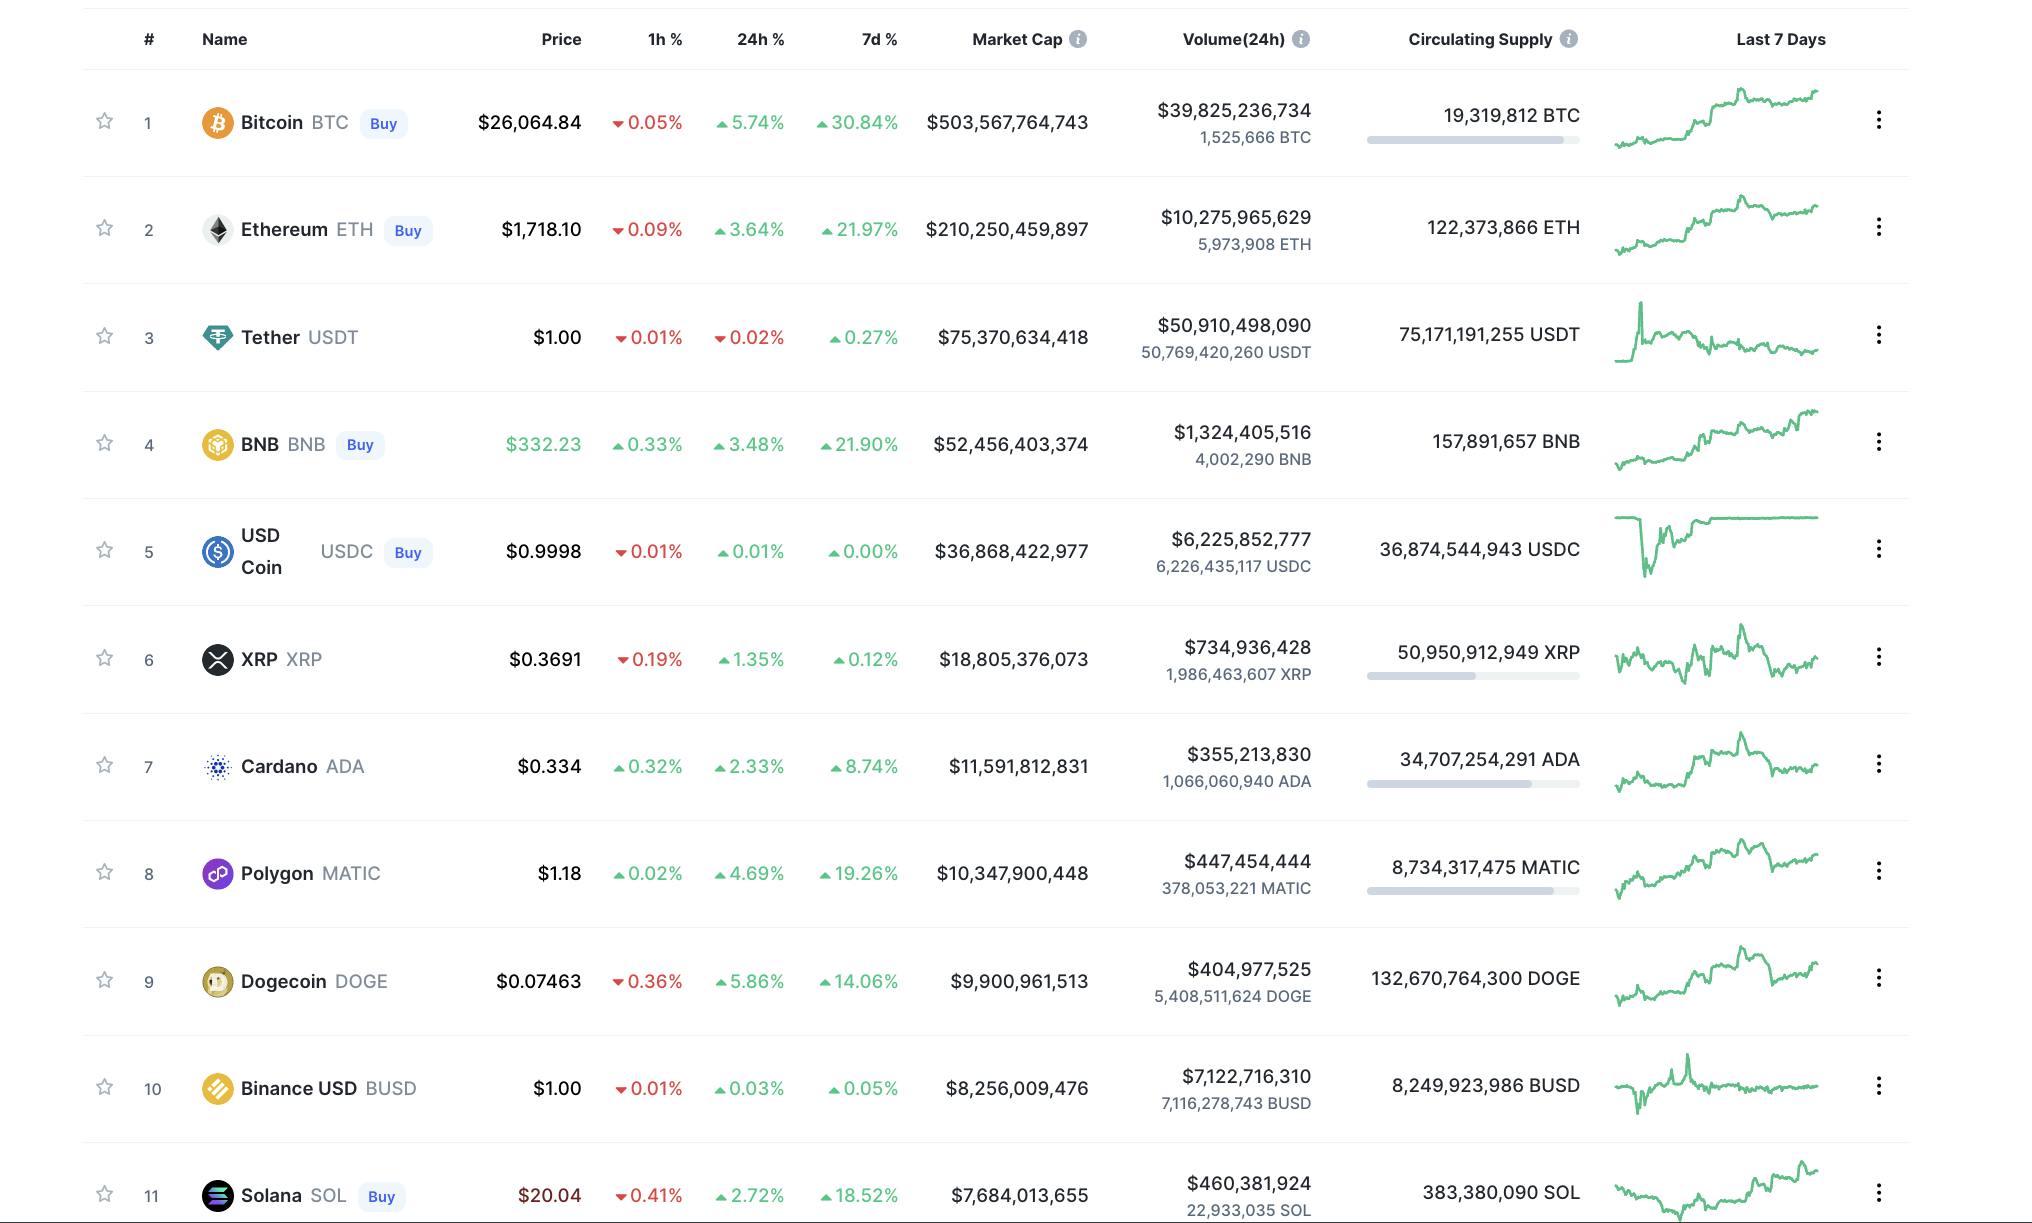 Price chart of top cryptocurrencies